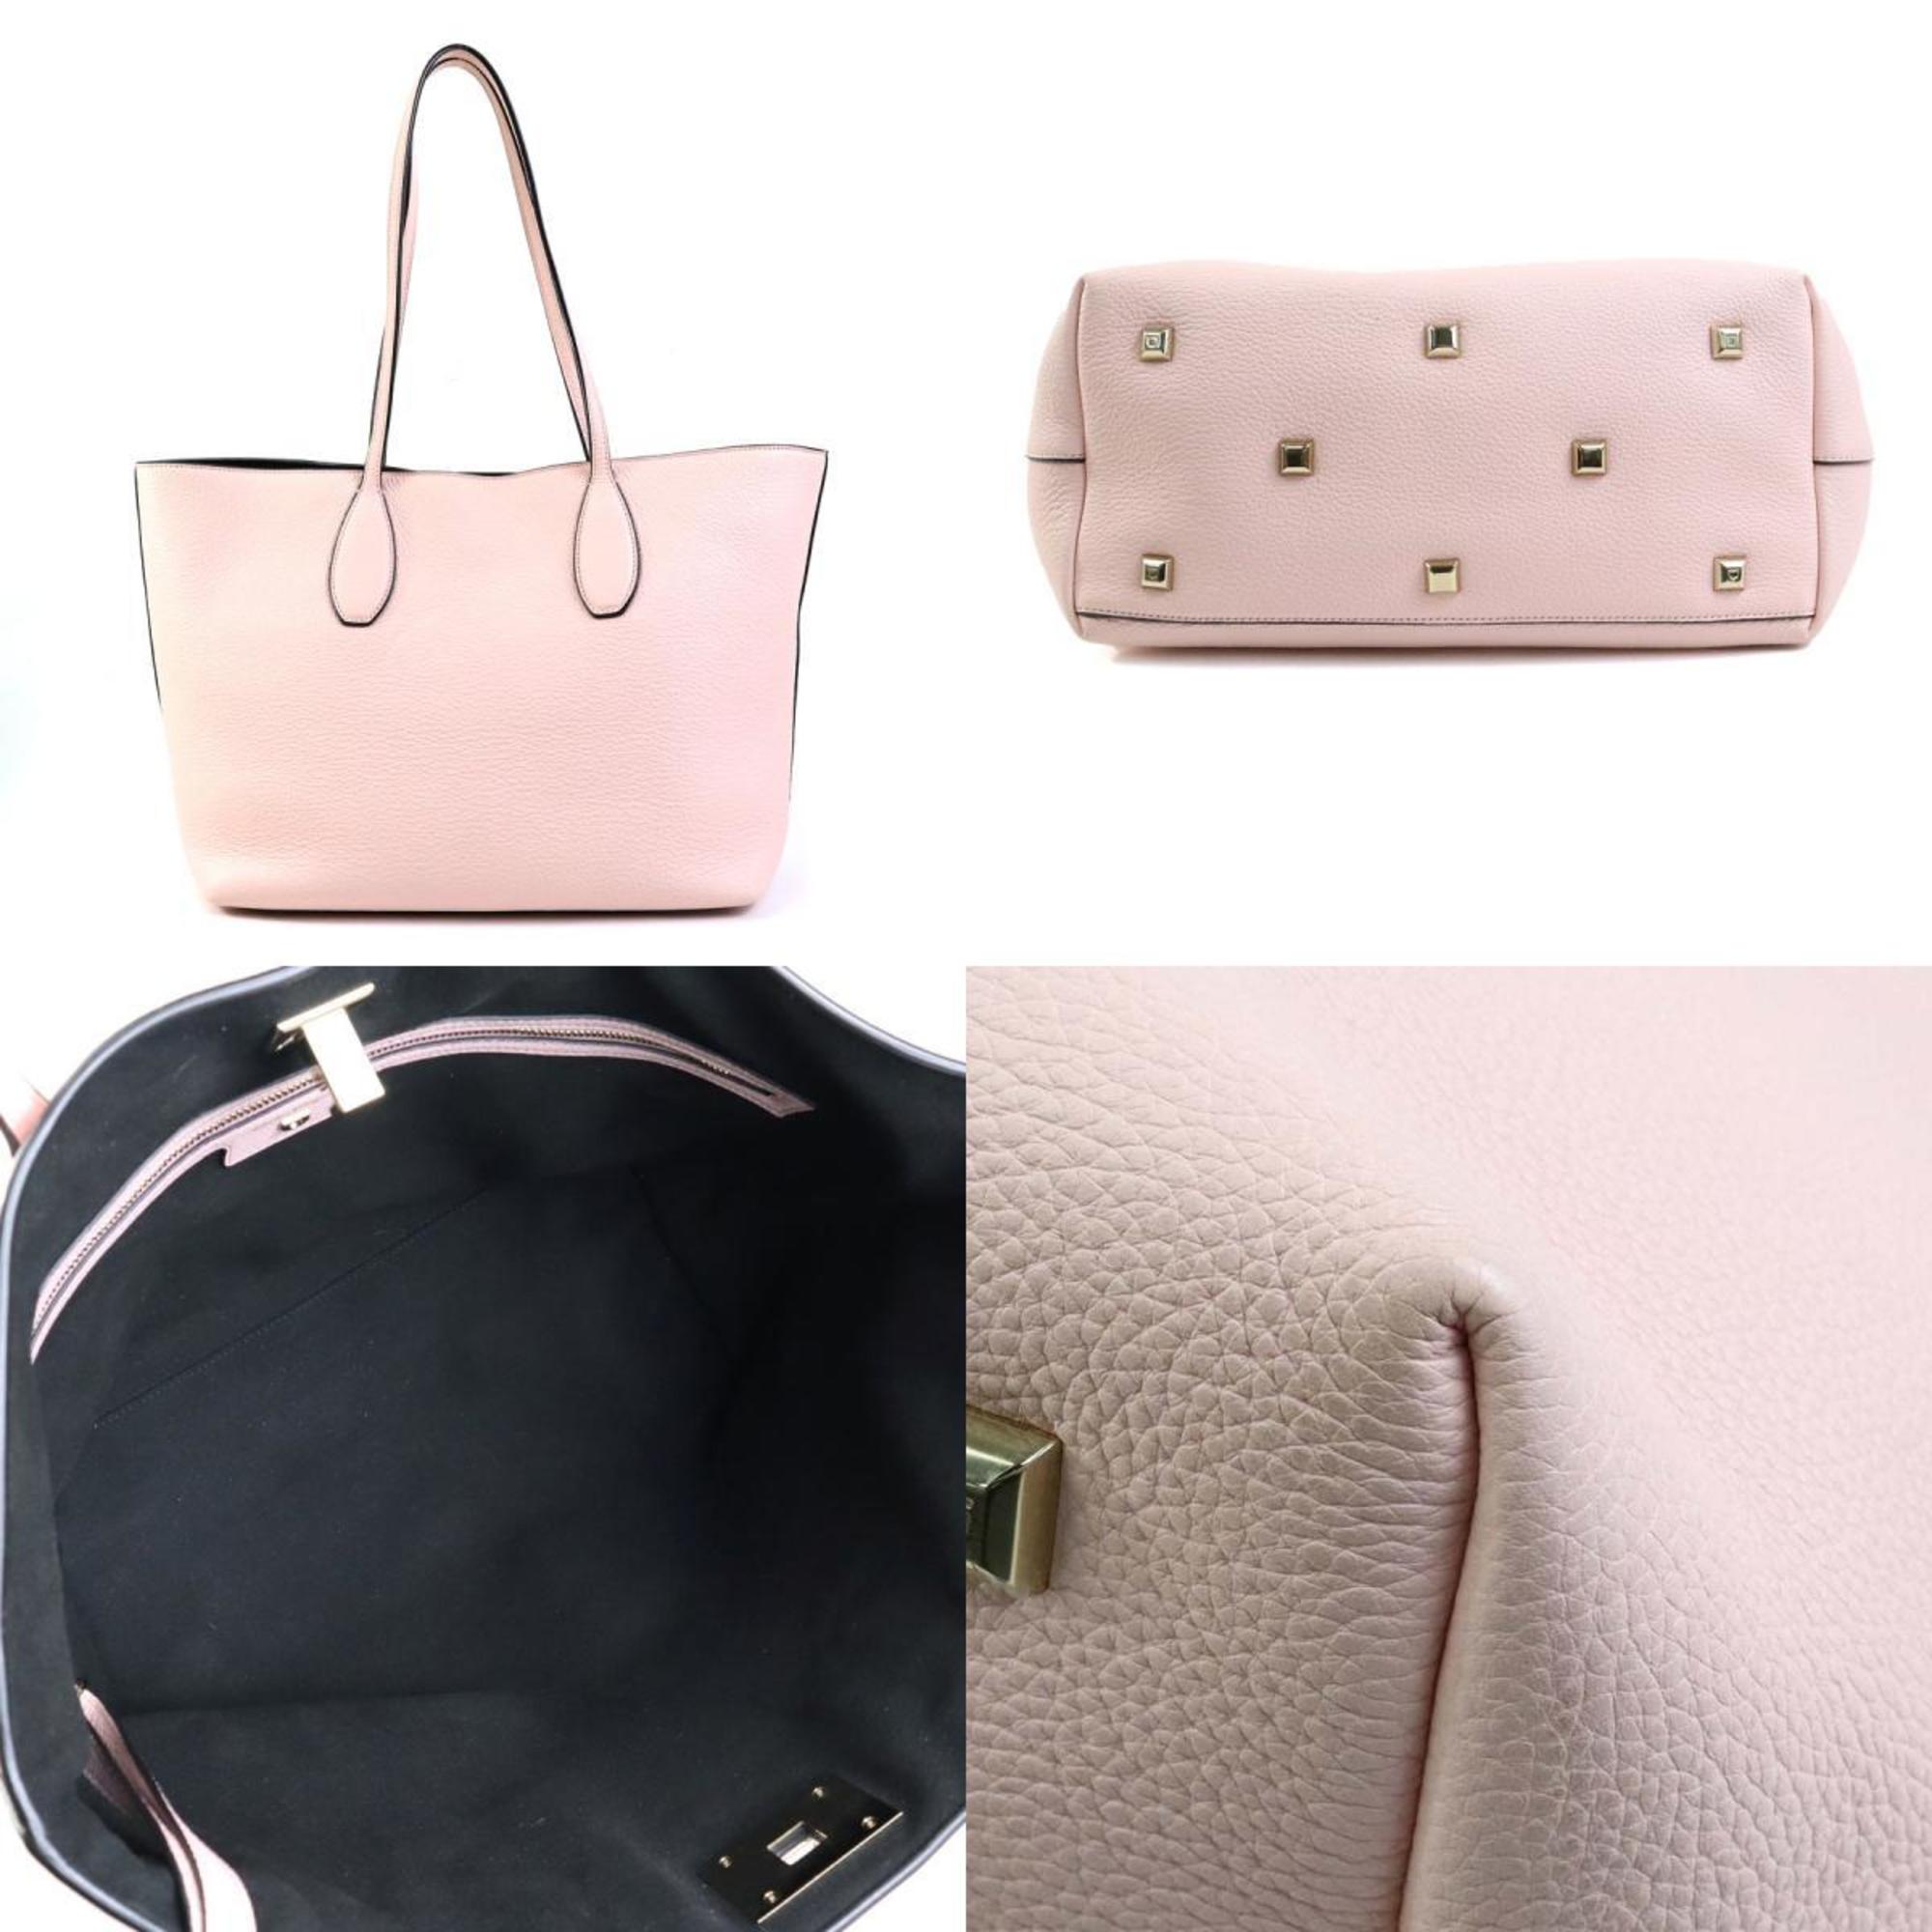 Salvatore Ferragamo shoulder bag Gancini leather pink ladies h30257g